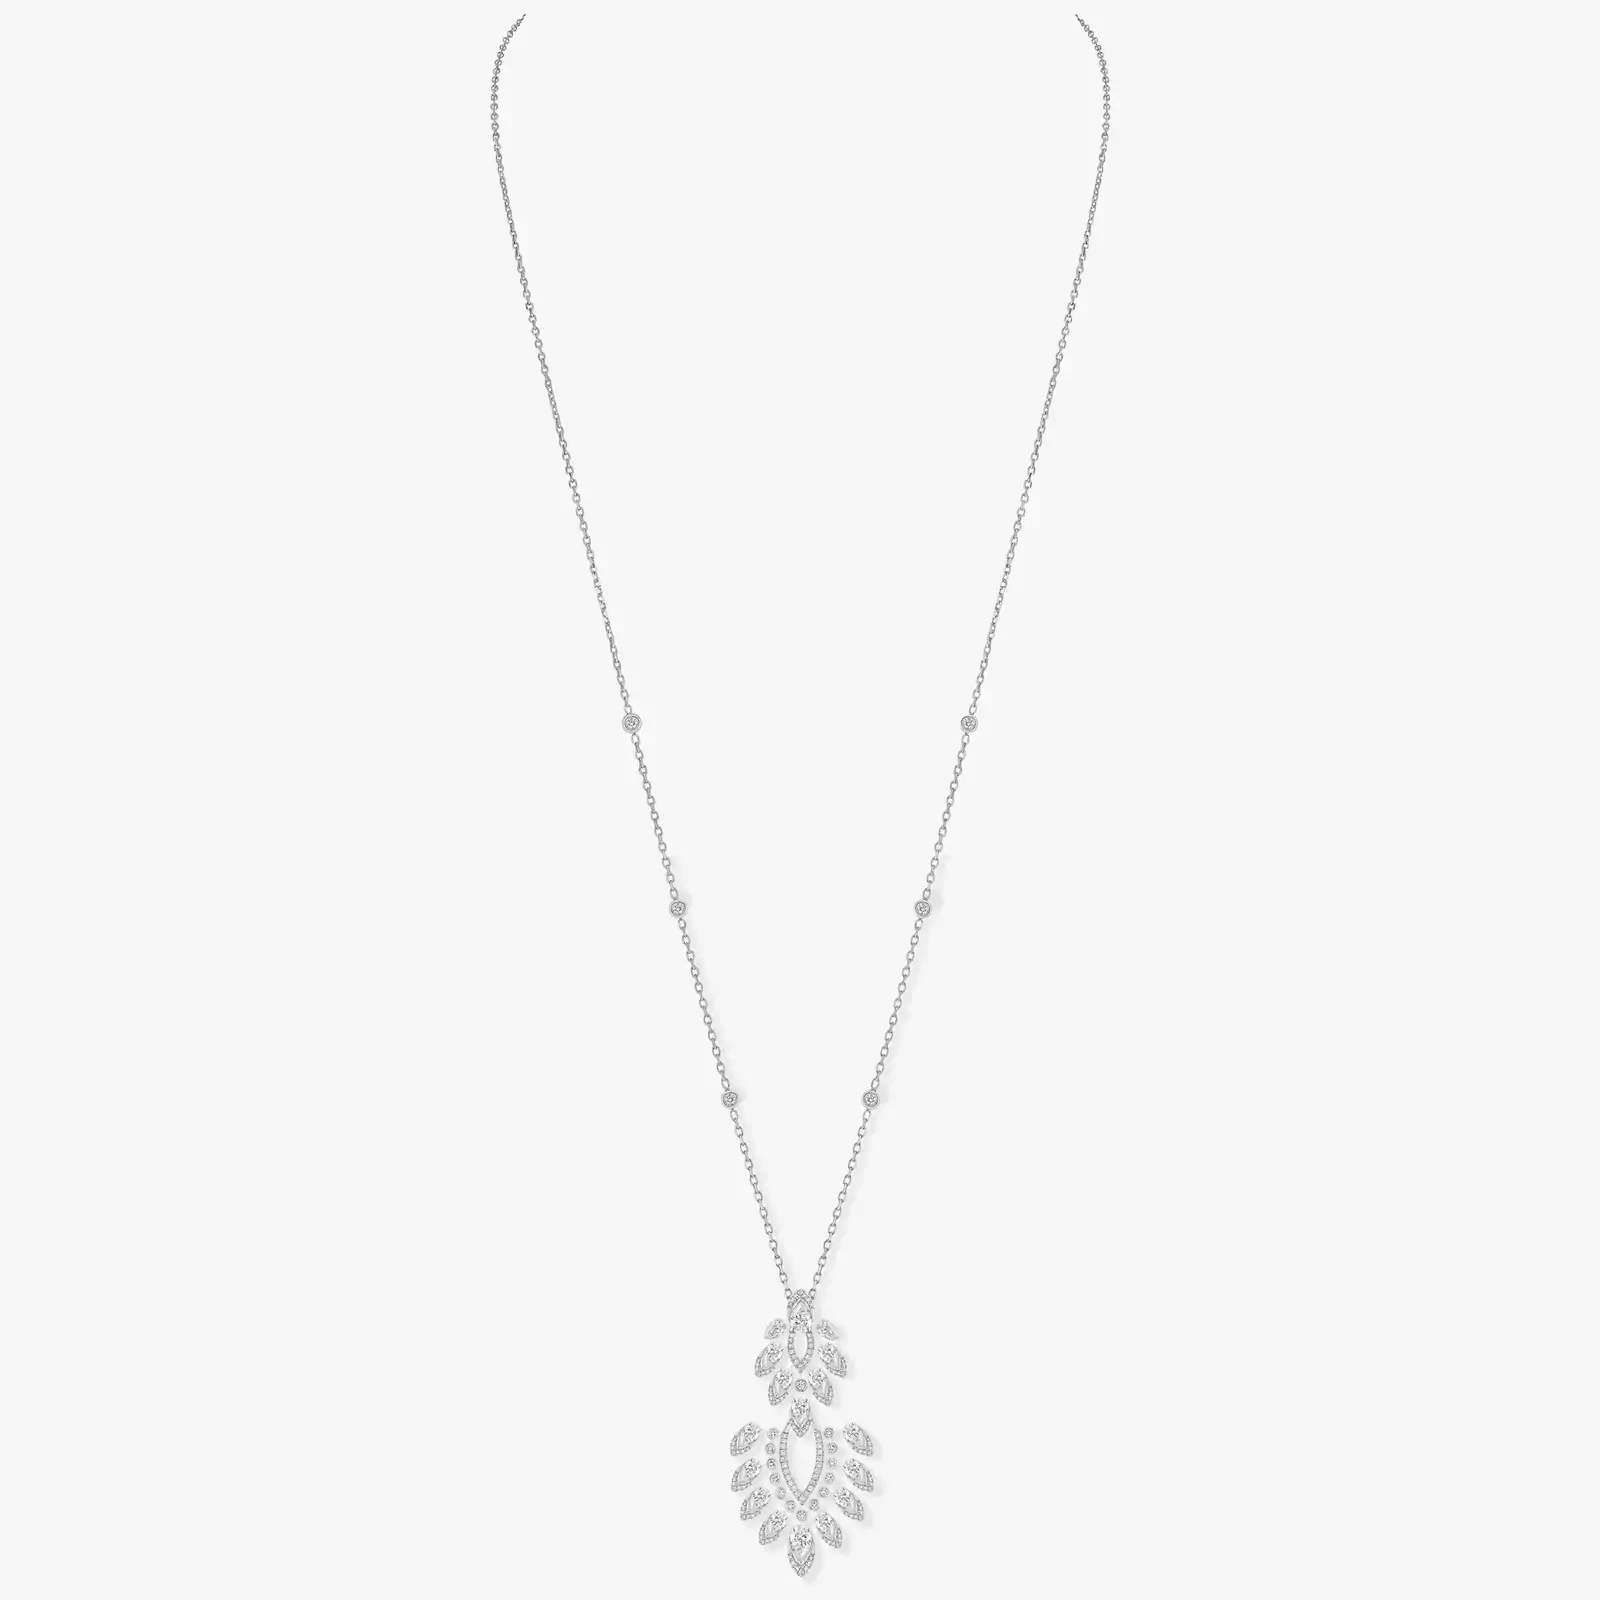 Desert Bloom Long Necklace White Gold For Her Diamond Necklace 07358-WG